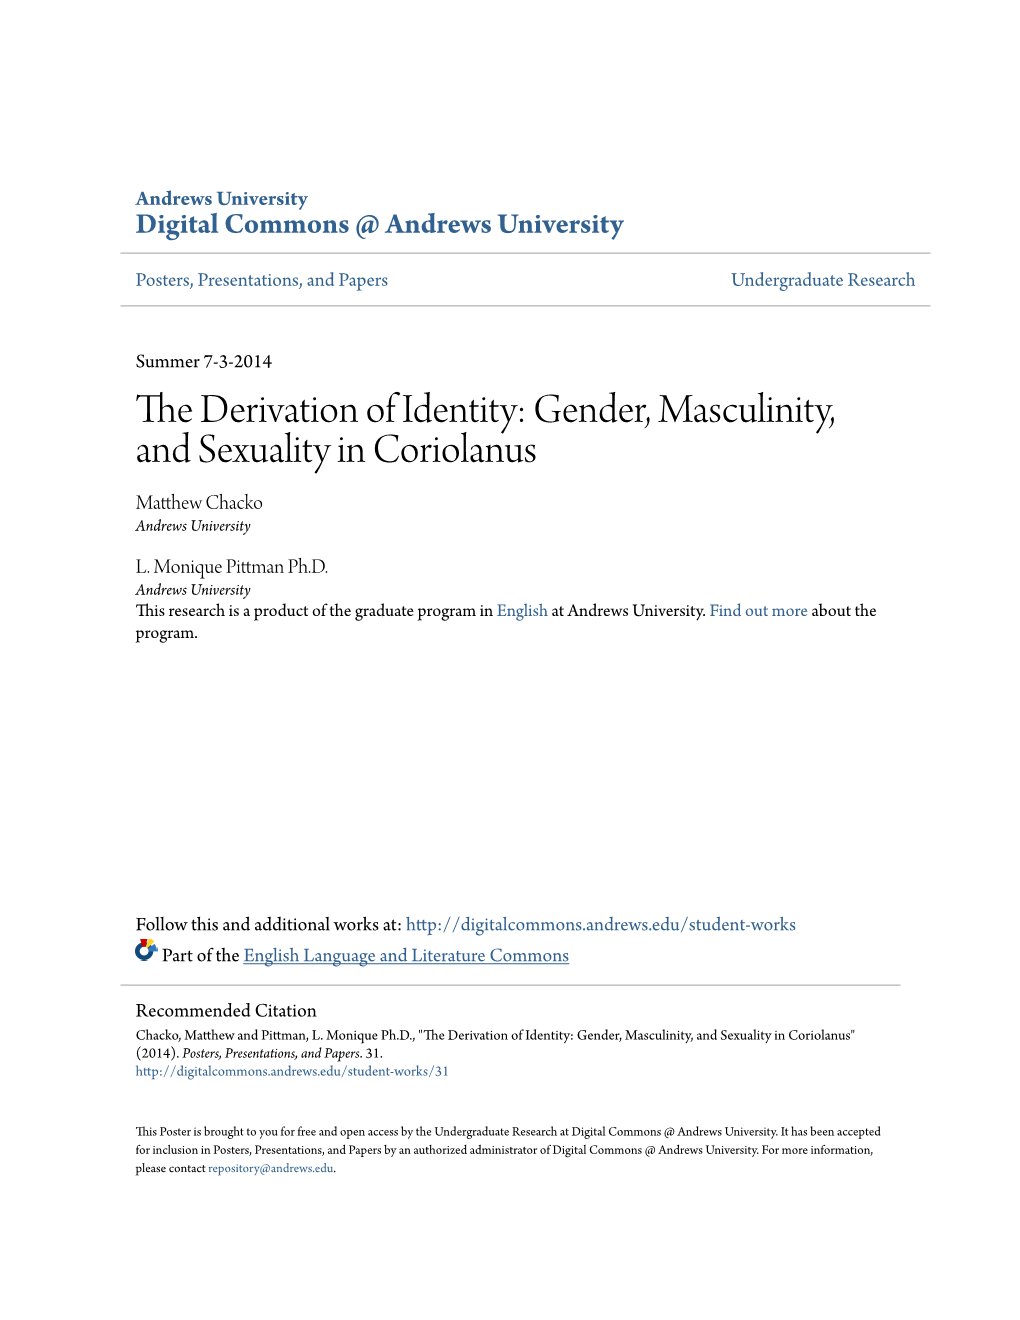 Gender, Masculinity, and Sexuality in Coriolanus Matthew Hc Acko Andrews University